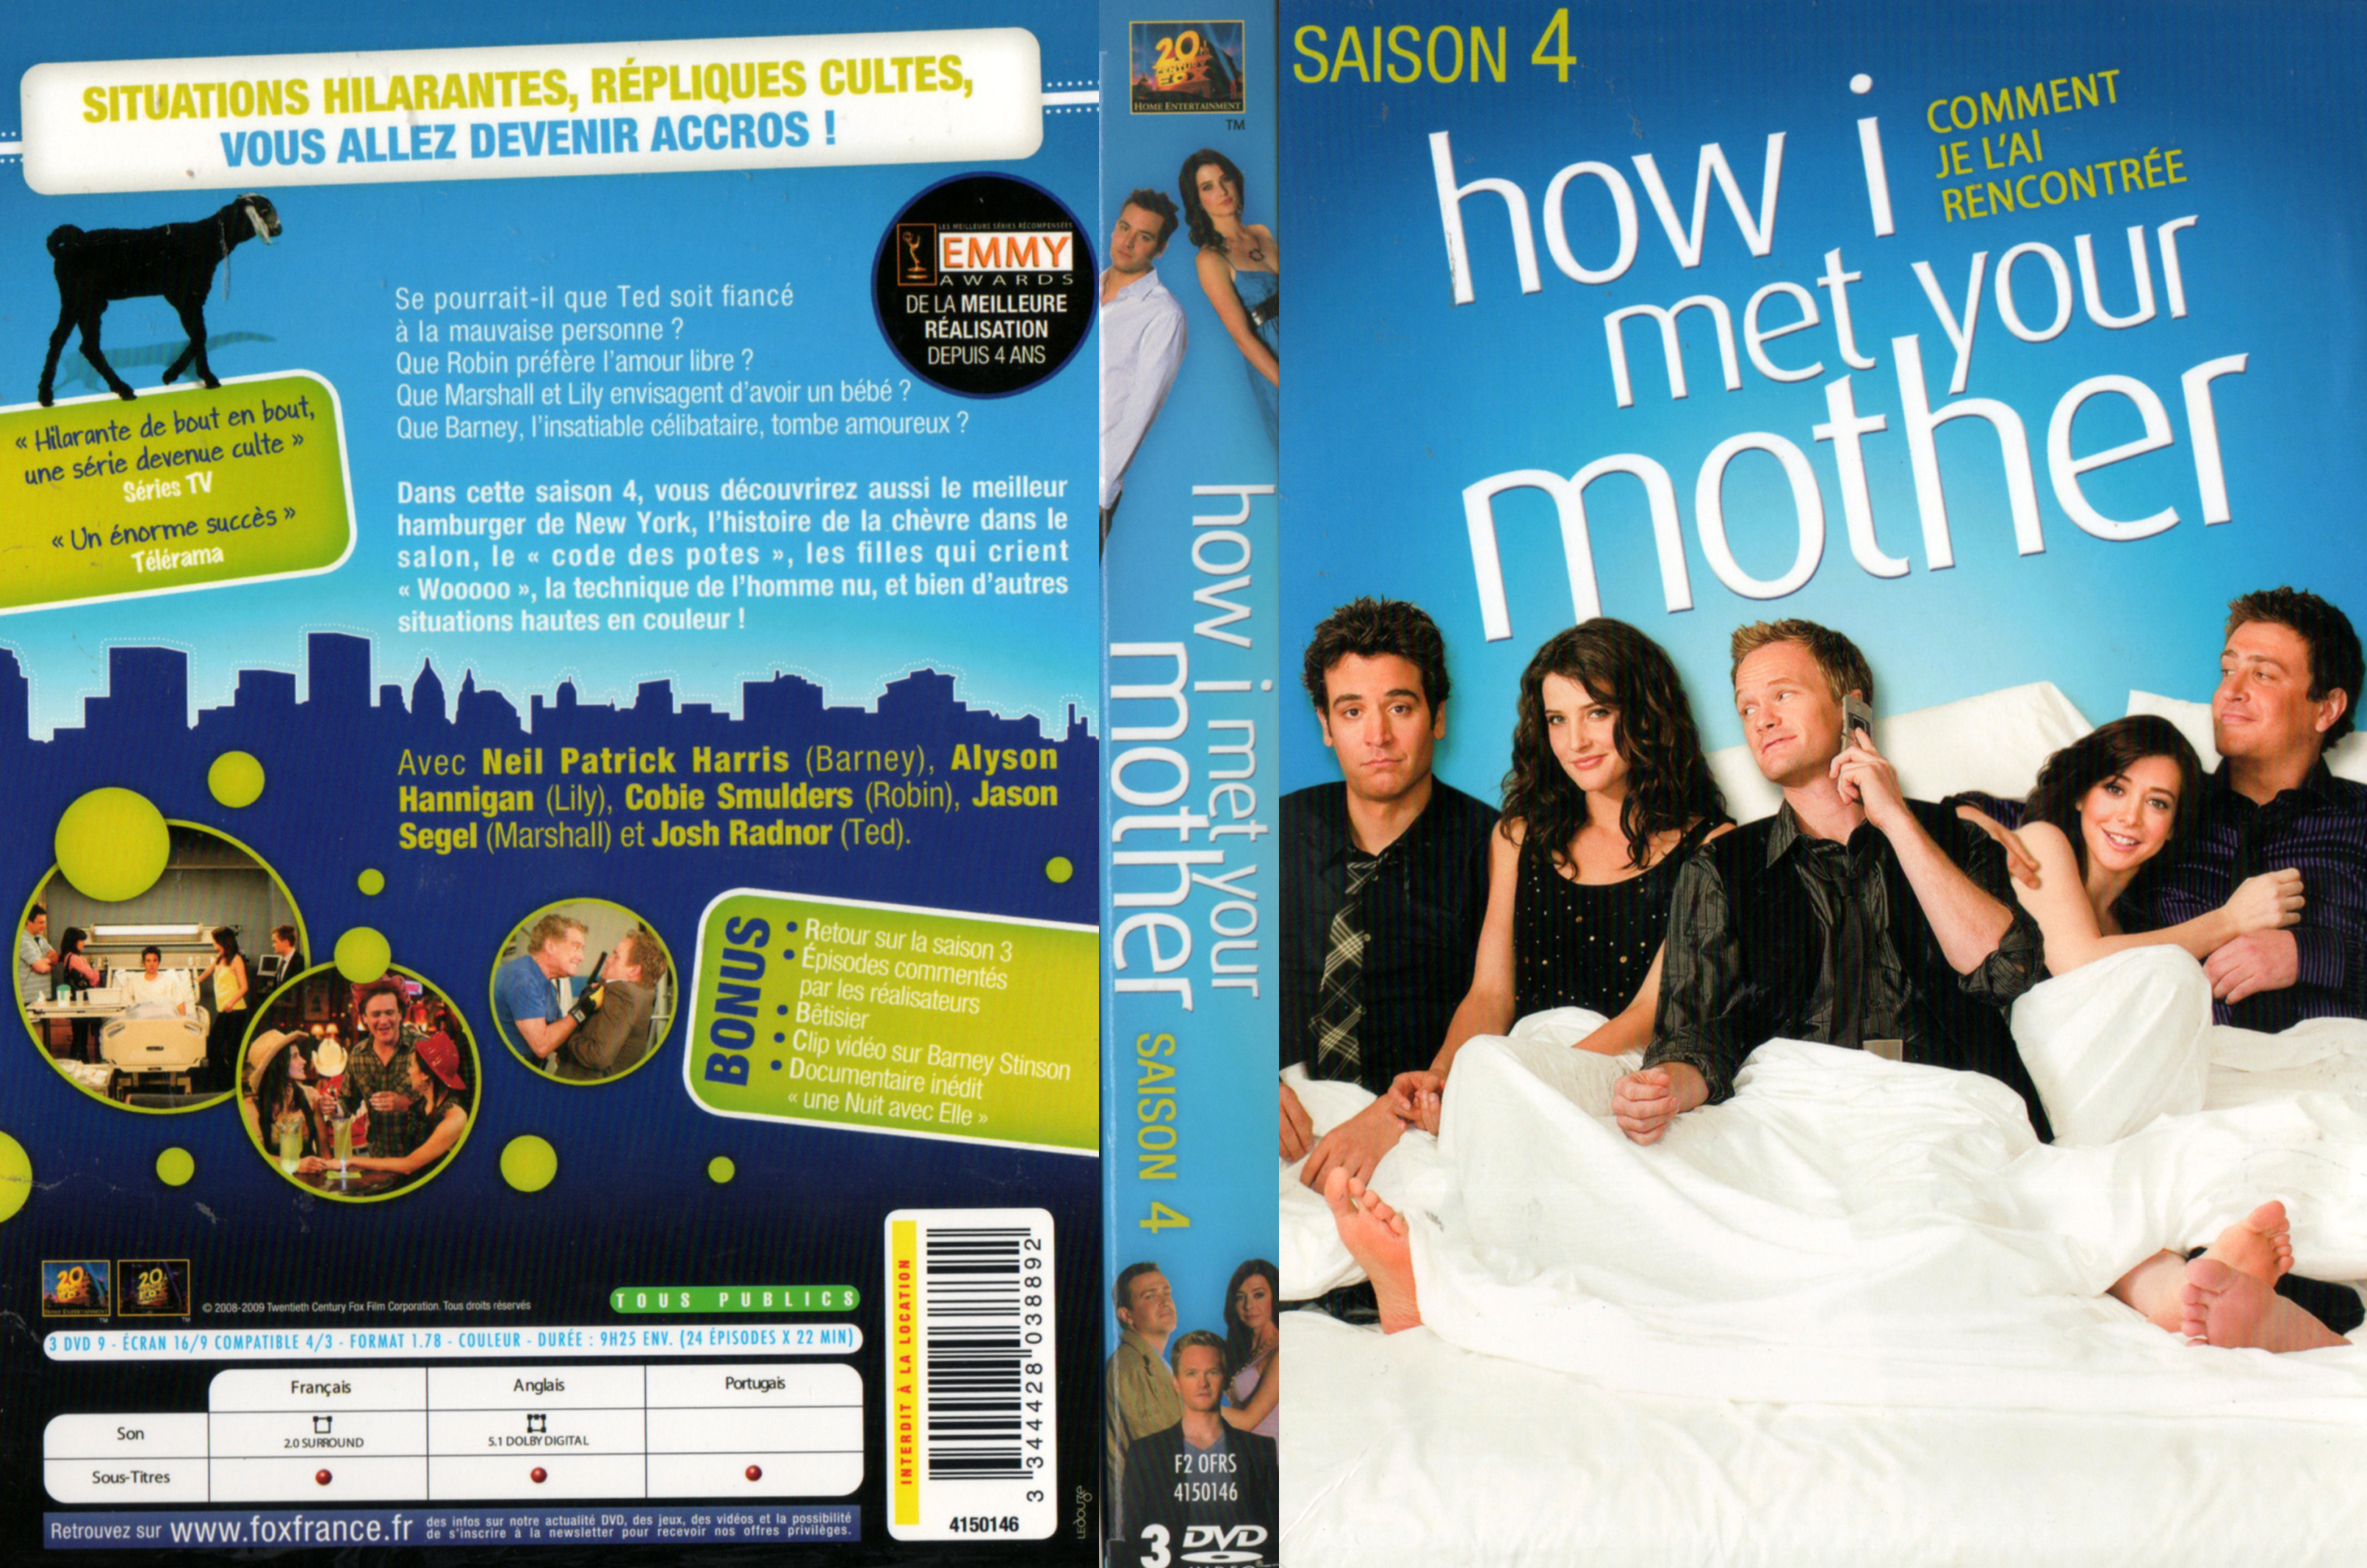 Jaquette DVD How i met your mother Saison 4 COFFRET